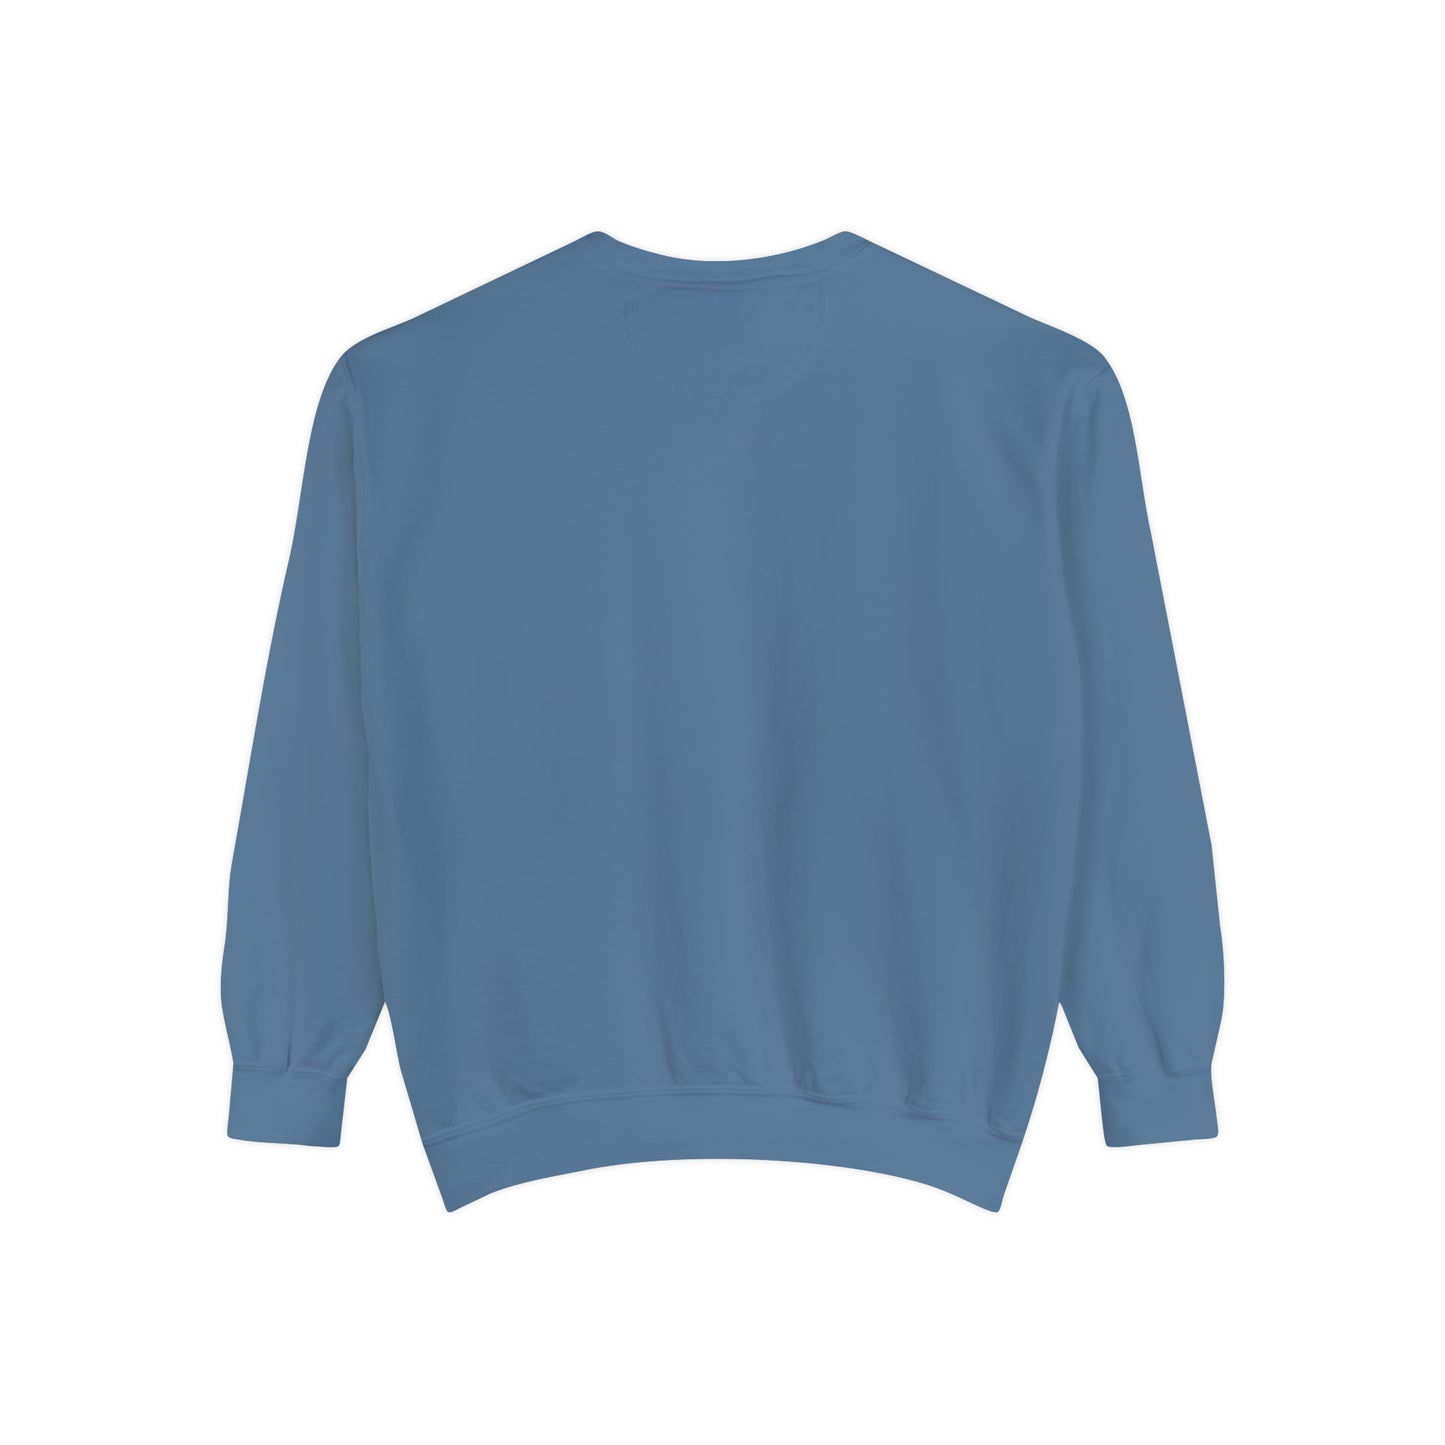 Coastal Cowgirl Comfort Colors Sweatshirt